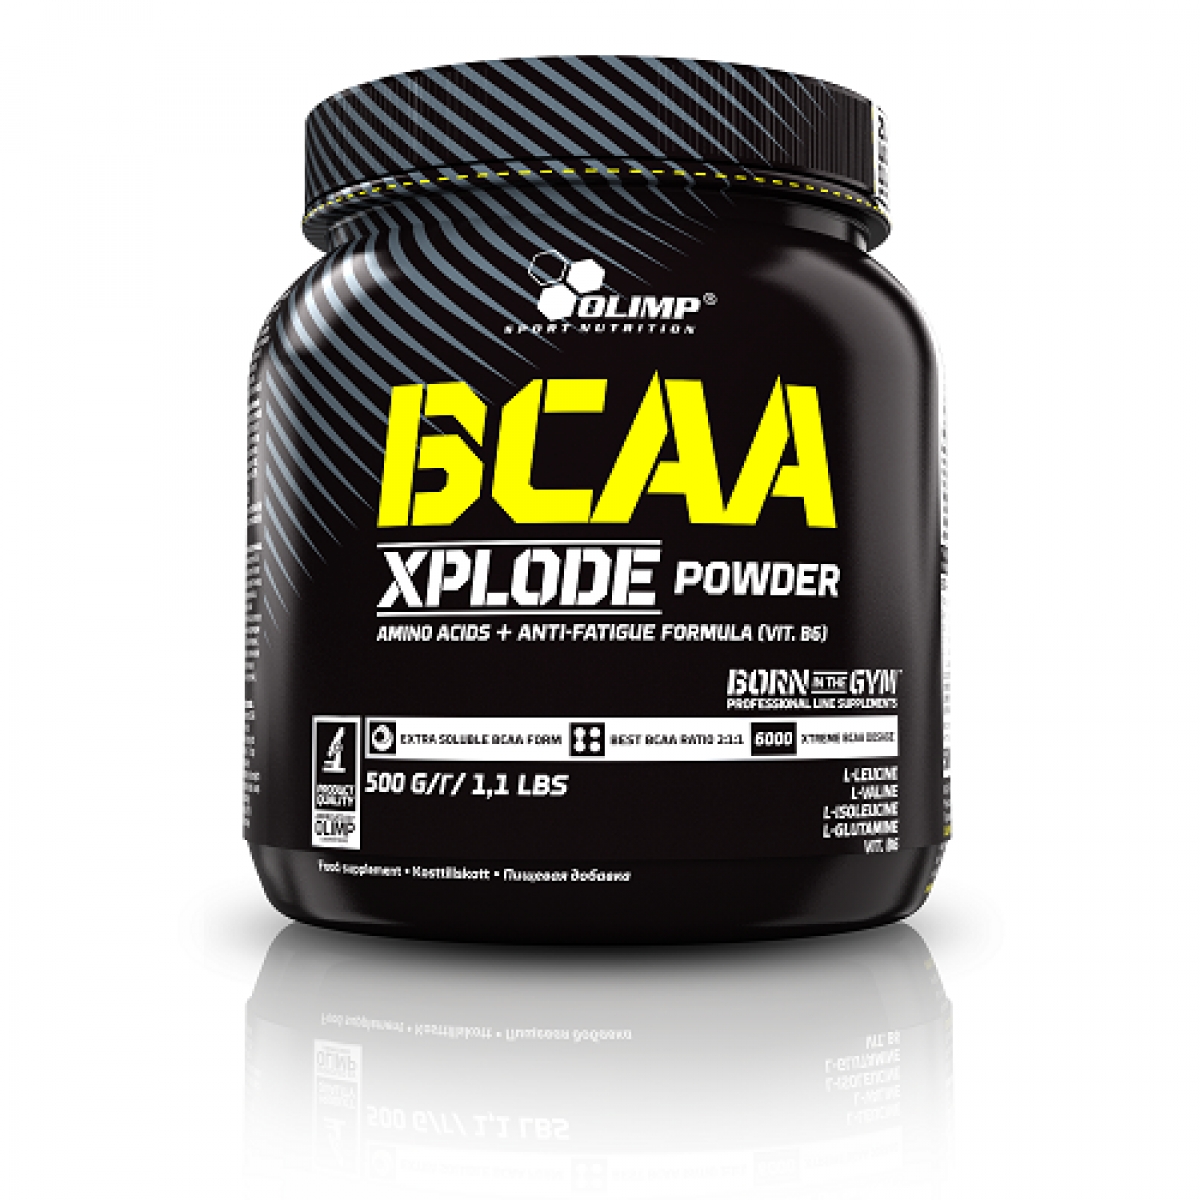  BCAA XPLODE POWDER, 500 G